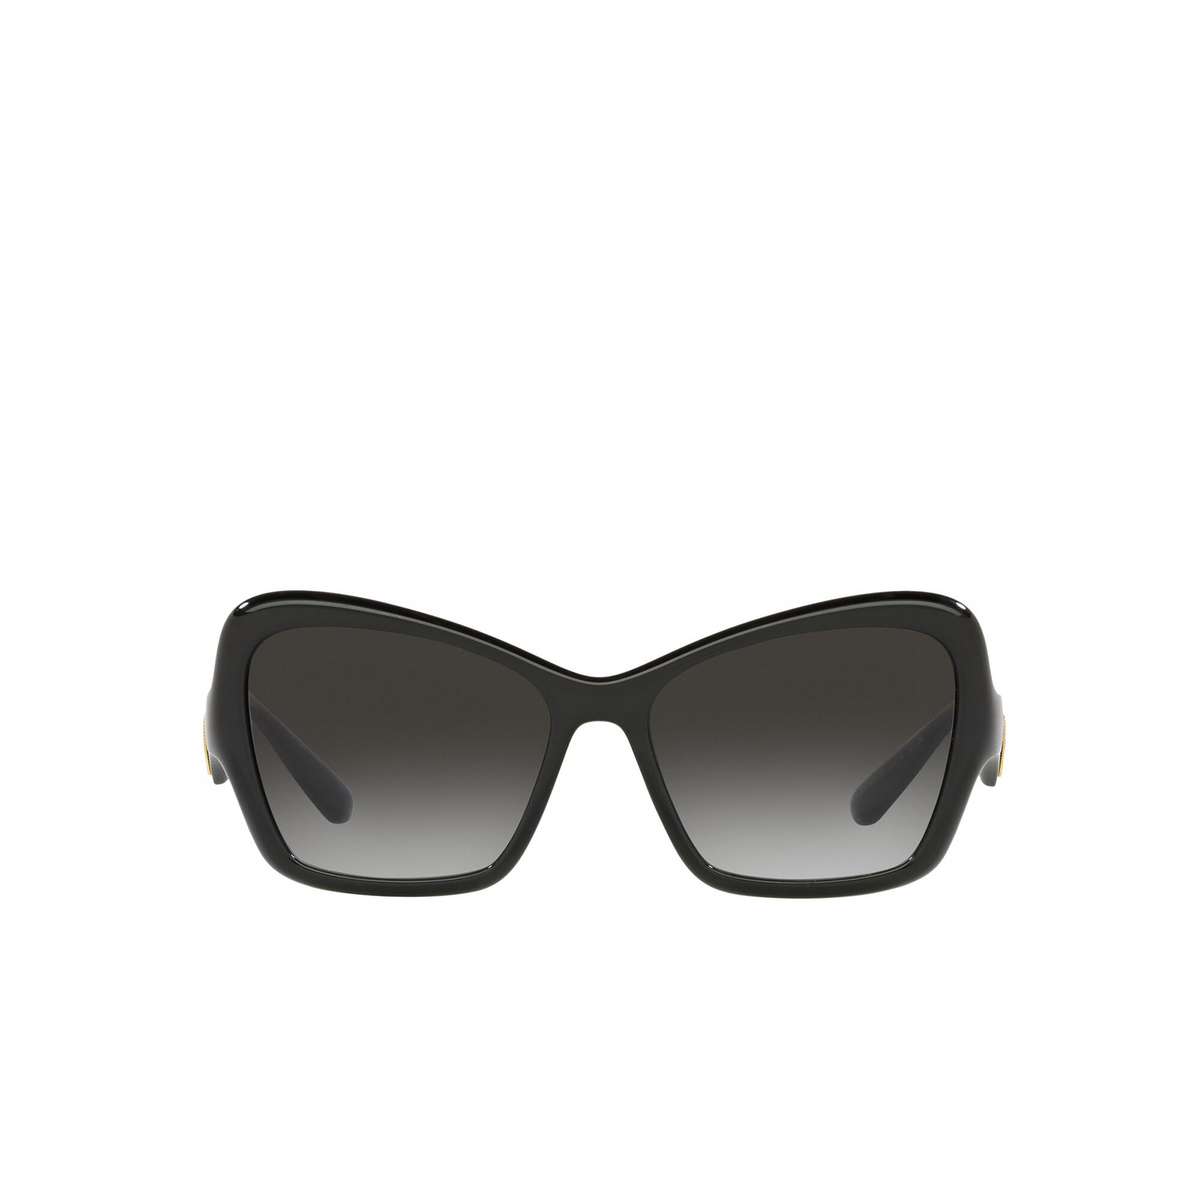 Dolce & Gabbana DG6153 Sunglasses 501/8G Black - front view